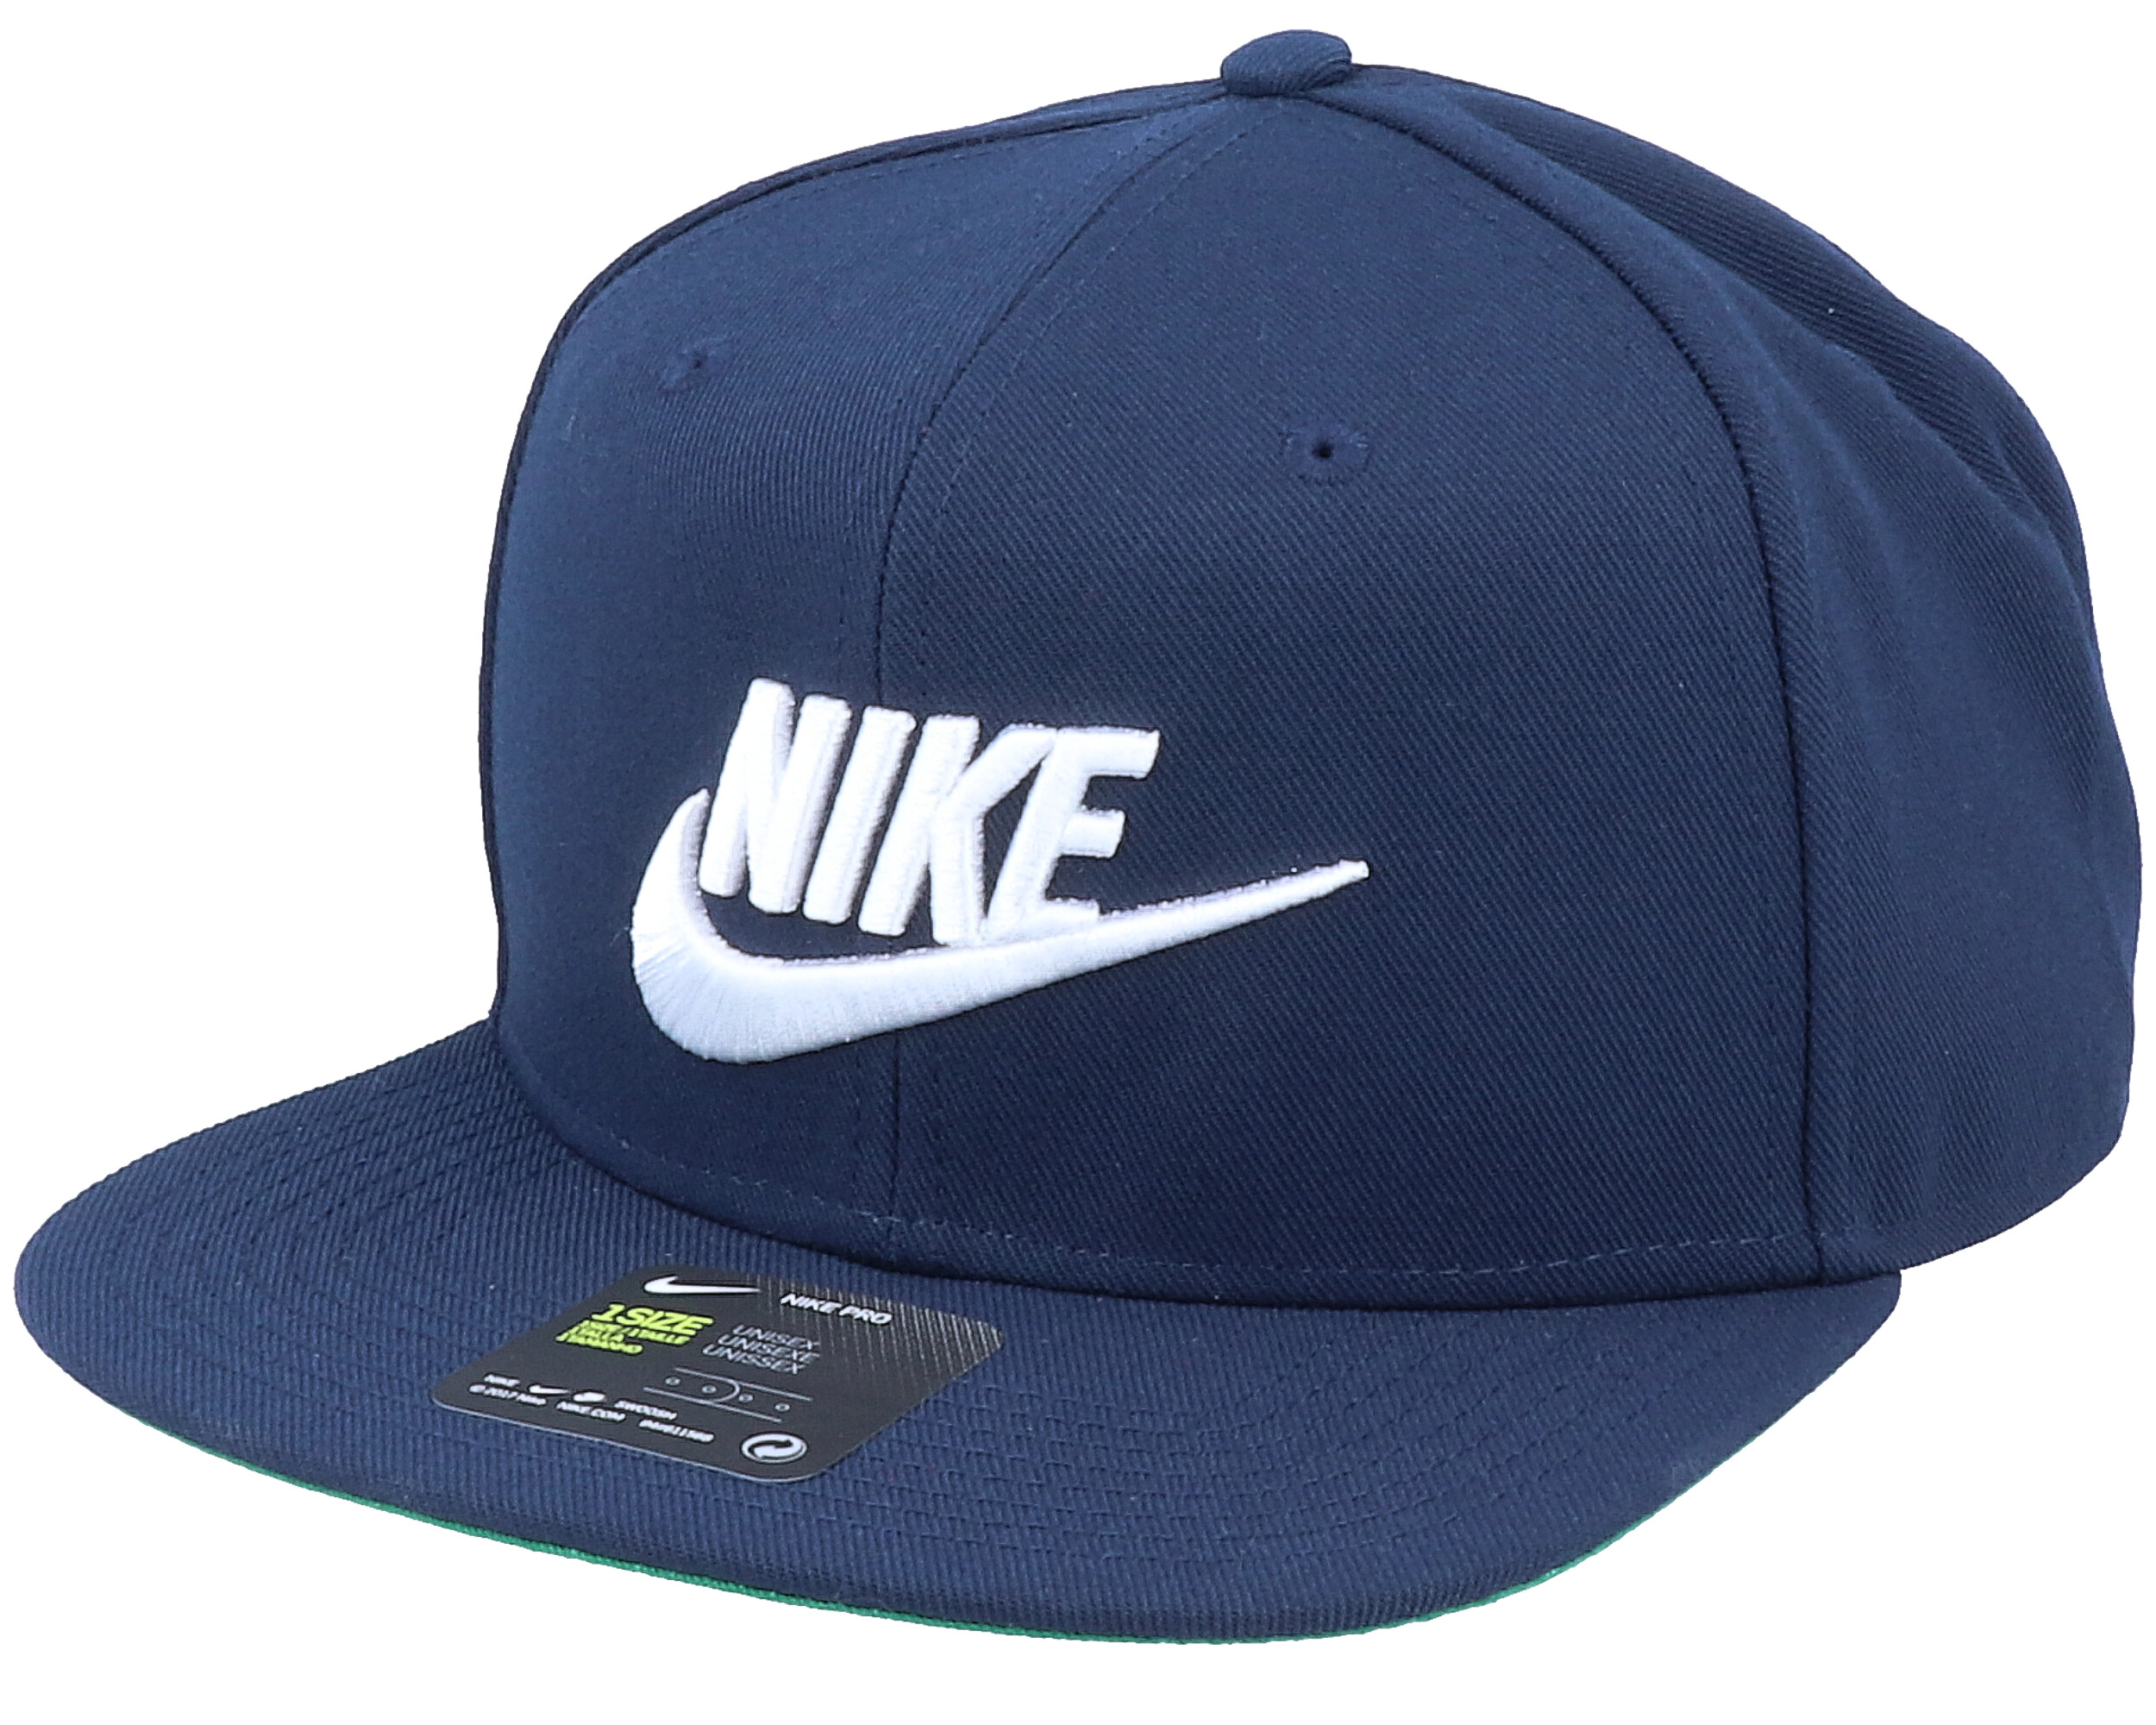 Obsidian Blue/White Snapback - Nike cap |